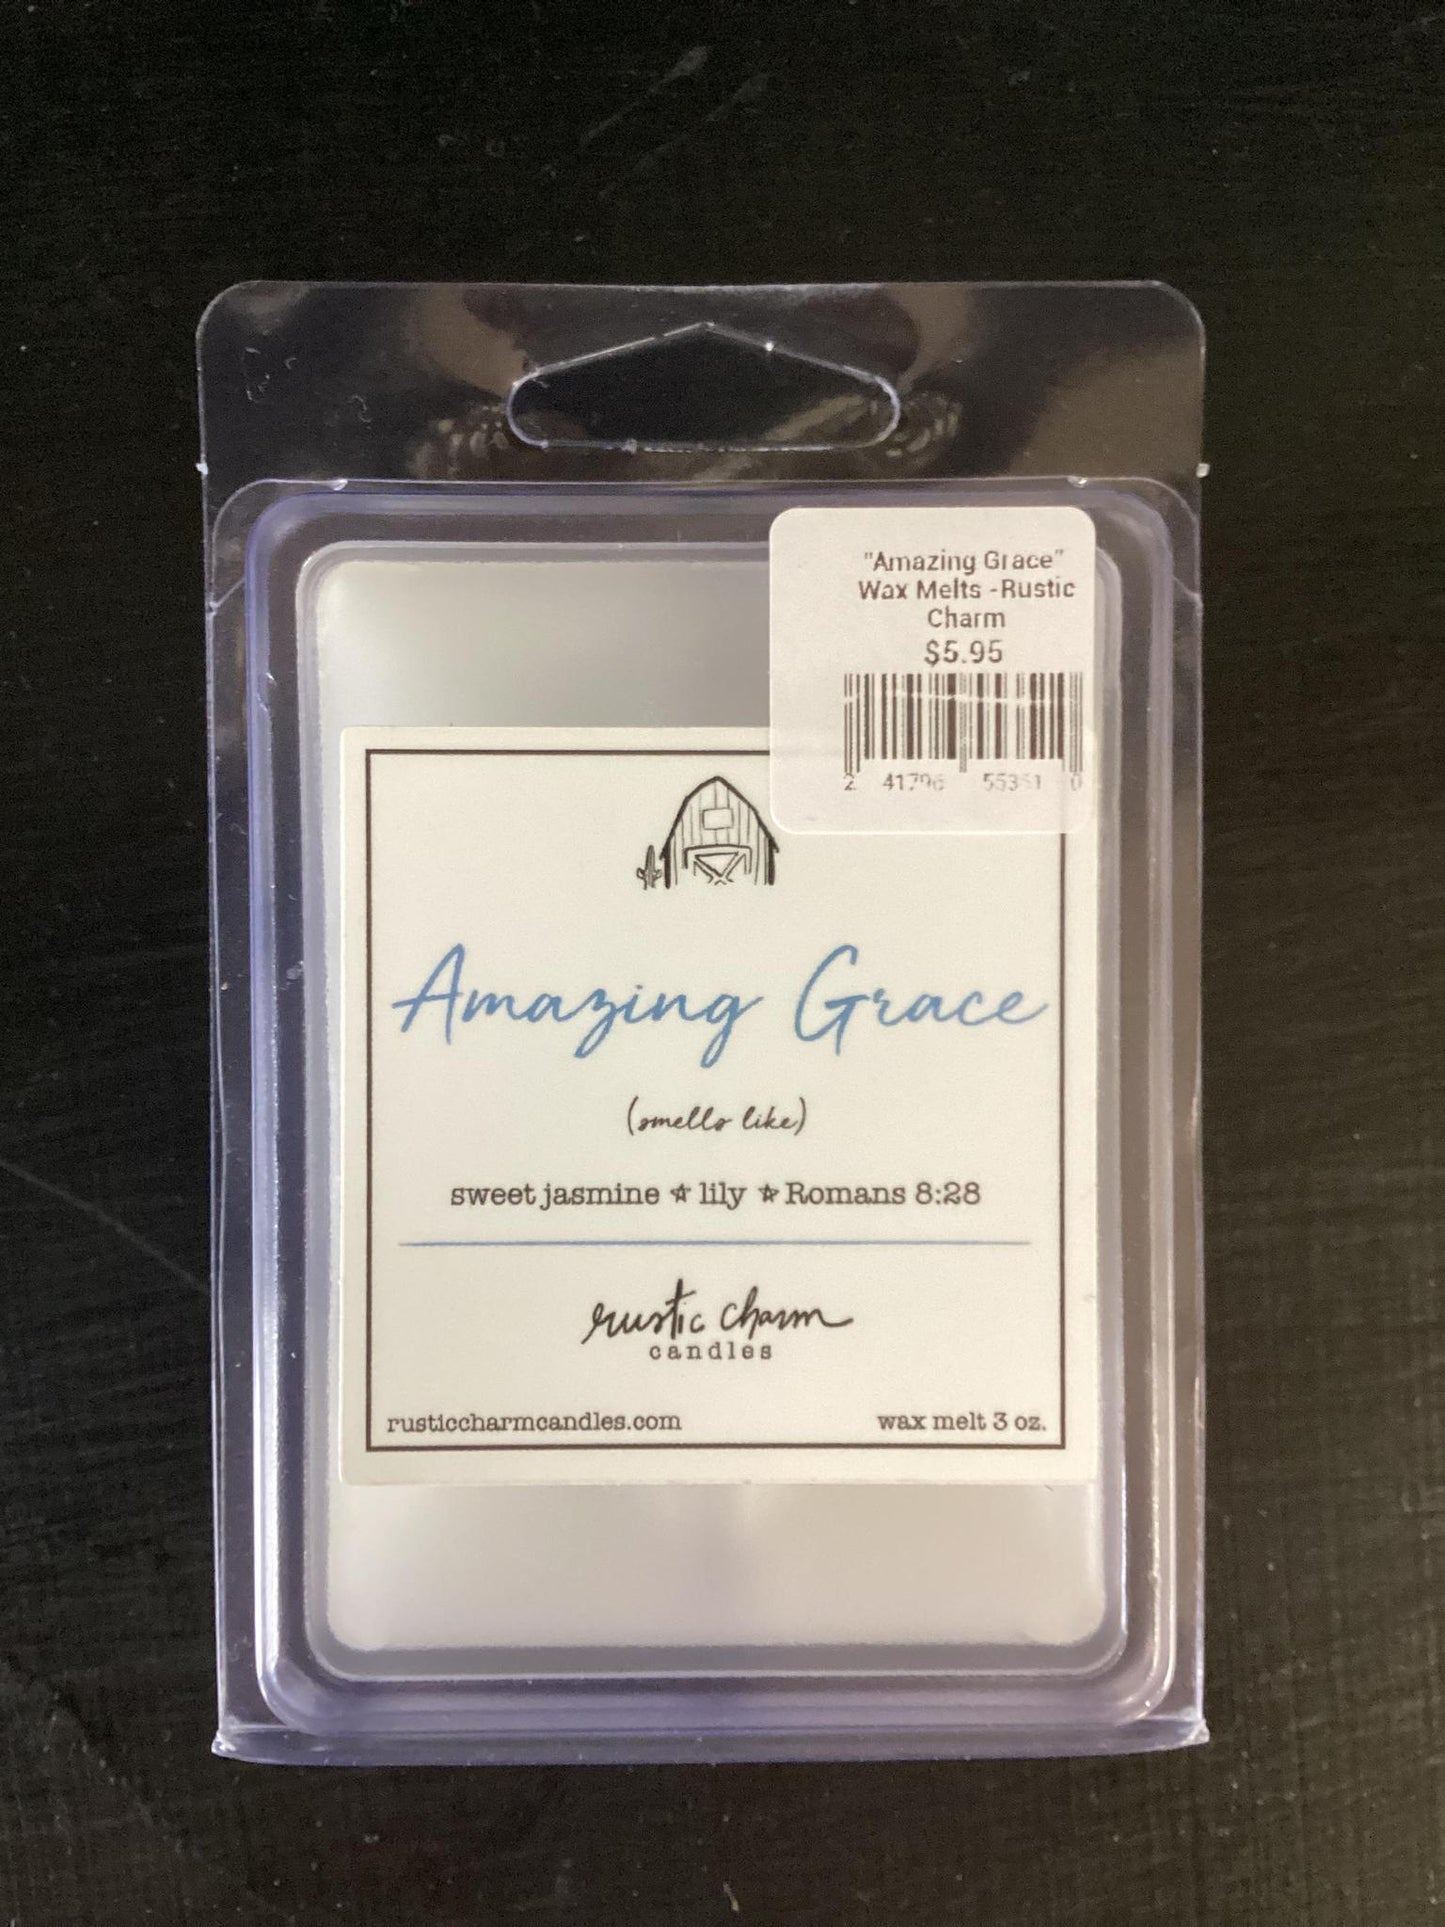 "Amazing Grace" Wax Melts -Rustic Charm